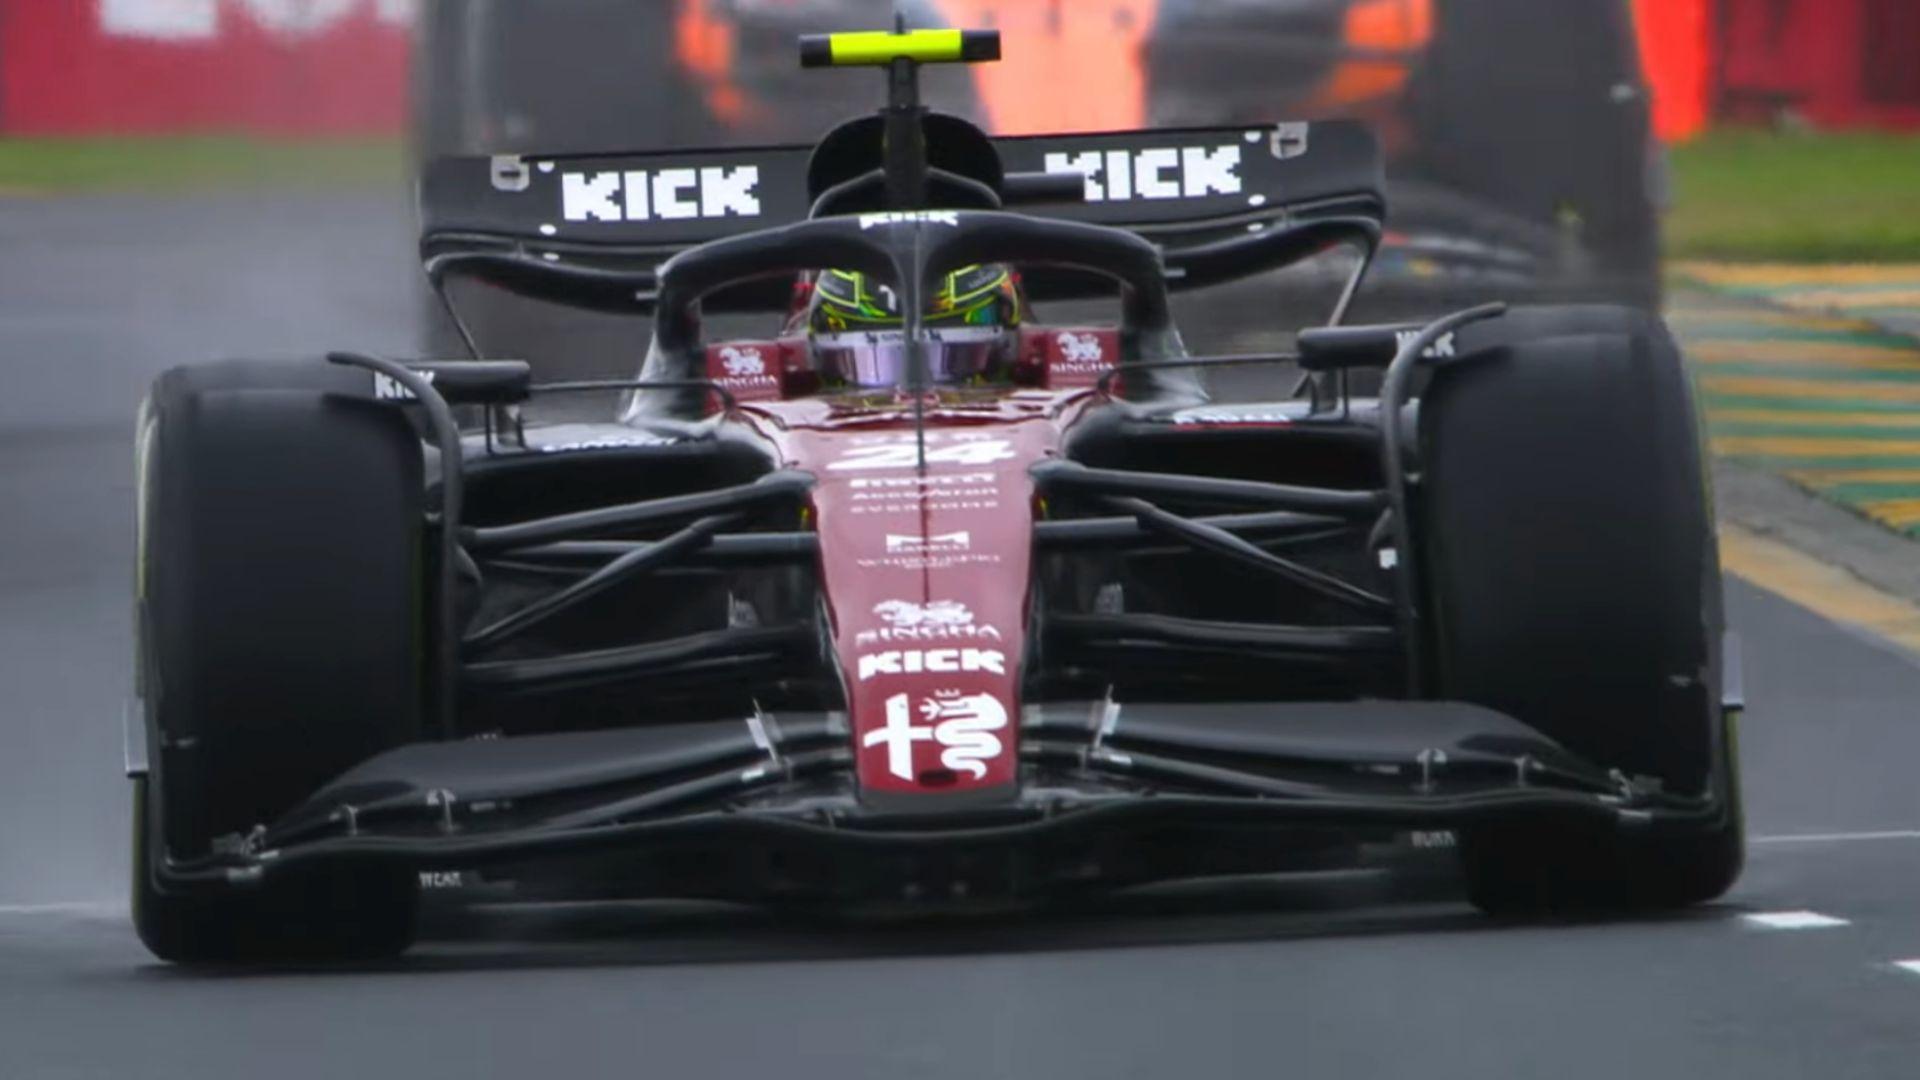 Screenshot of Alfa Romeo 2023 F1 car driving with Kick sponsor on rear wing